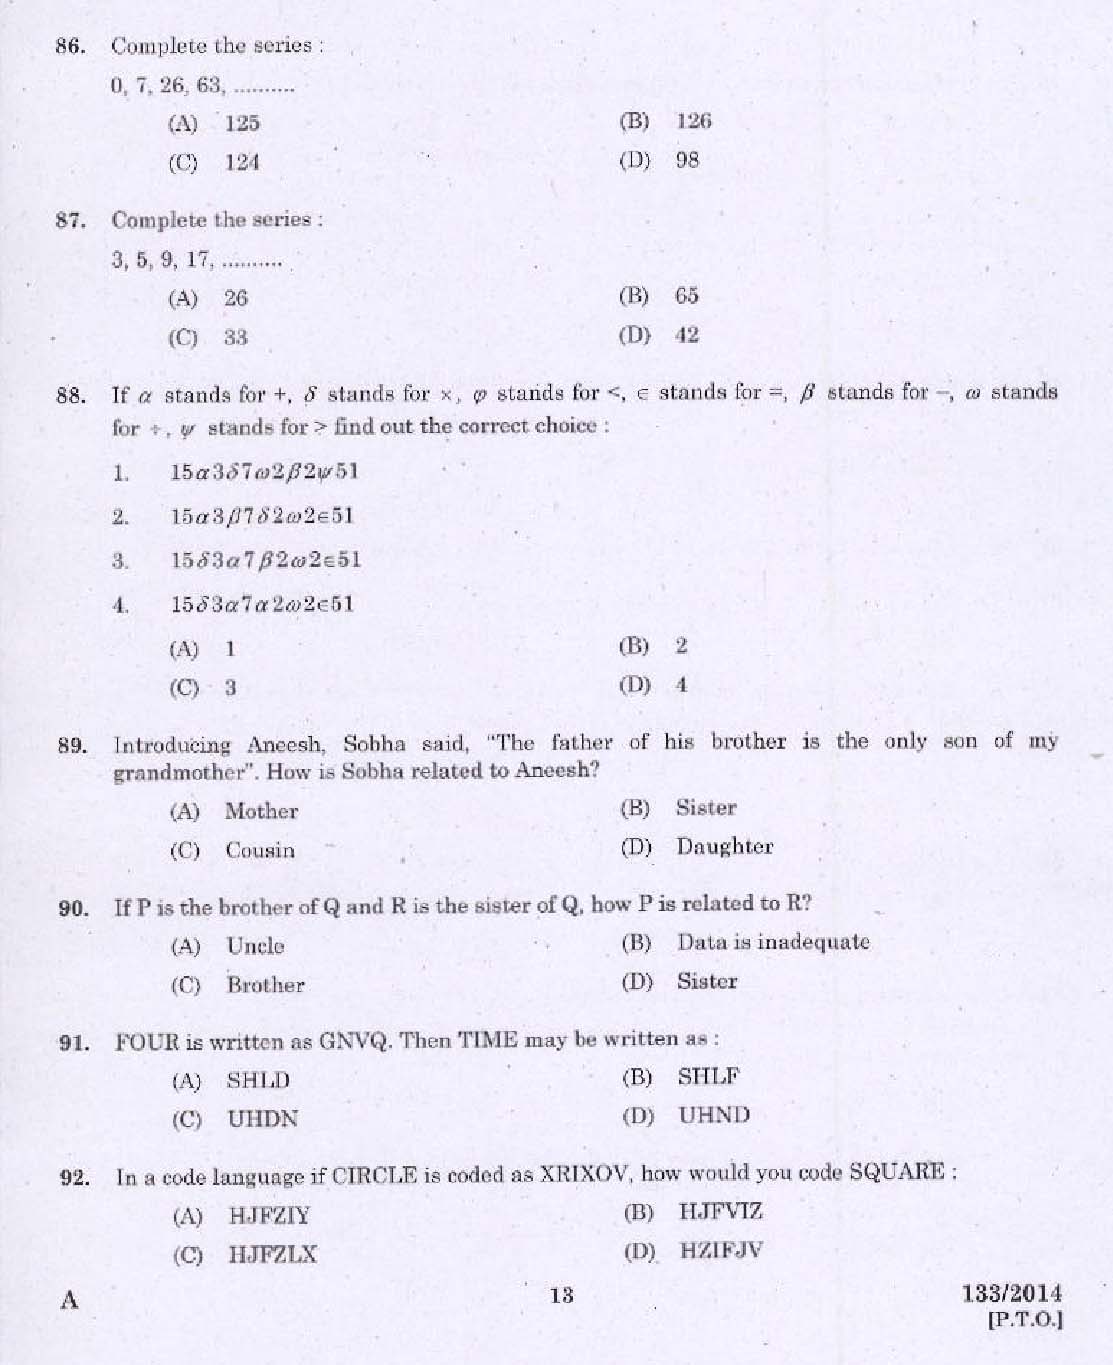 Kerala PSC Civil Excise Officer Exam Code 1332014 11